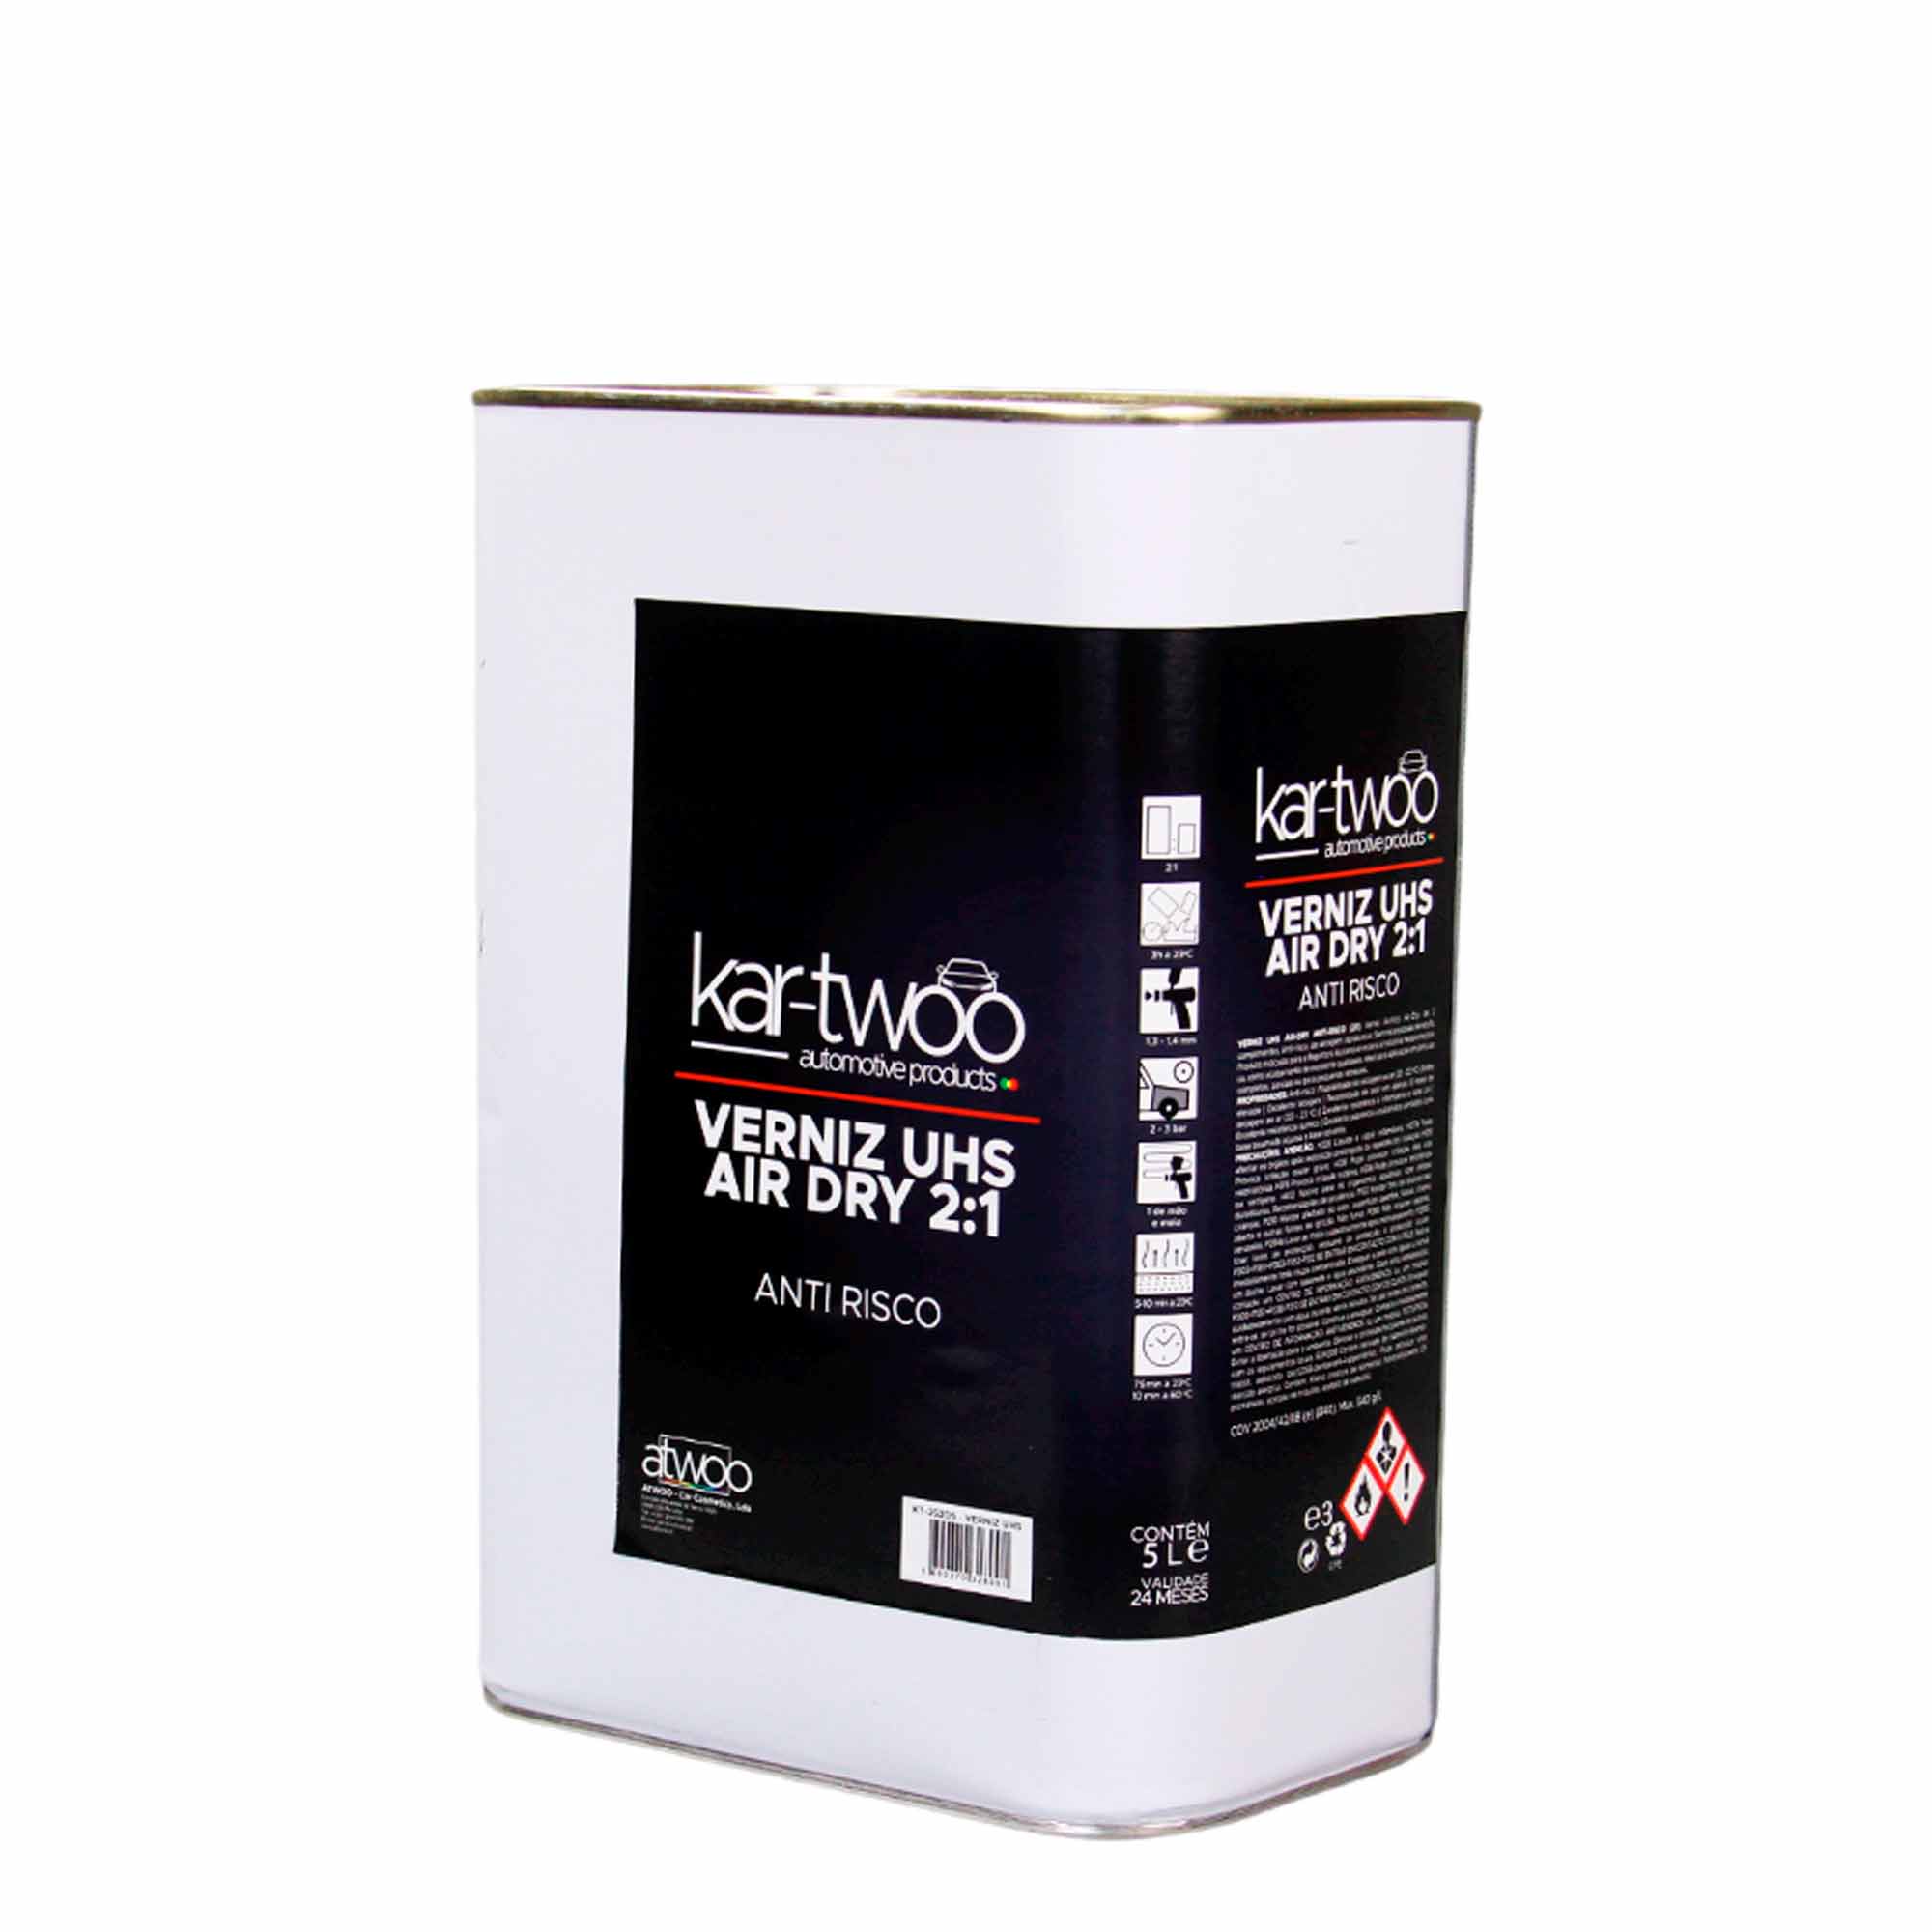 Verniz UHS Air Dry Anti-Risco (2:1) - 5 LT